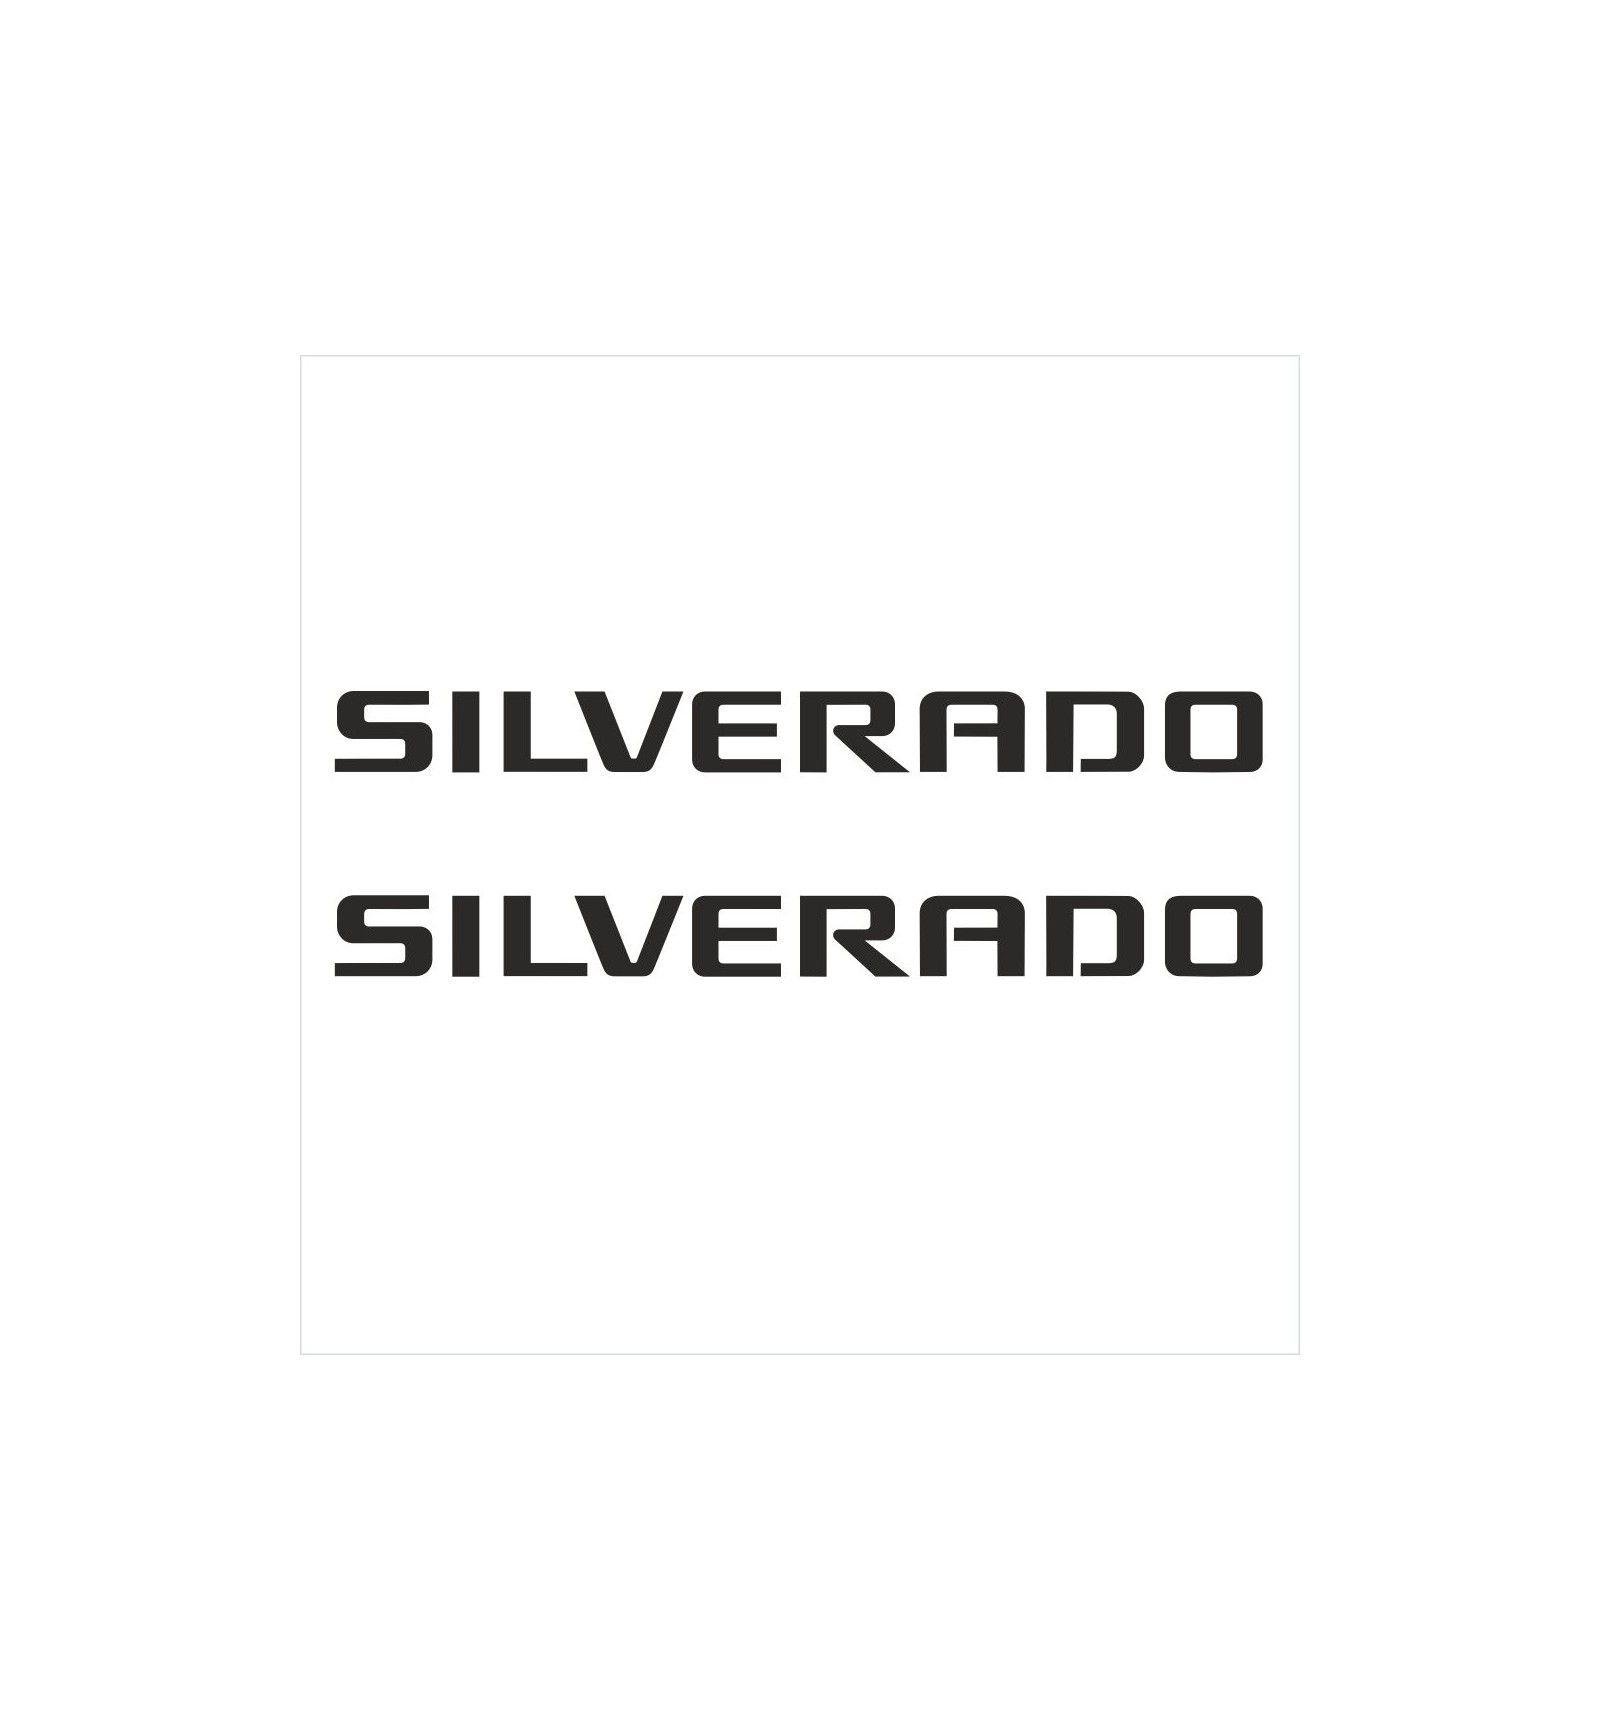 Silverado Logo - Set of 2 pieces Silverado logo vinyl decal sticker for your ...